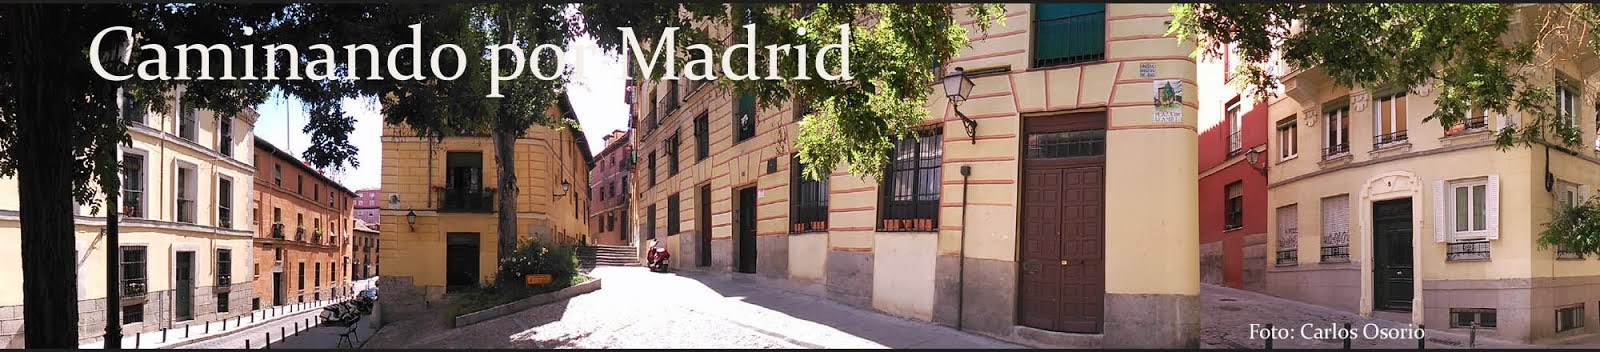 Caminando por Madrid